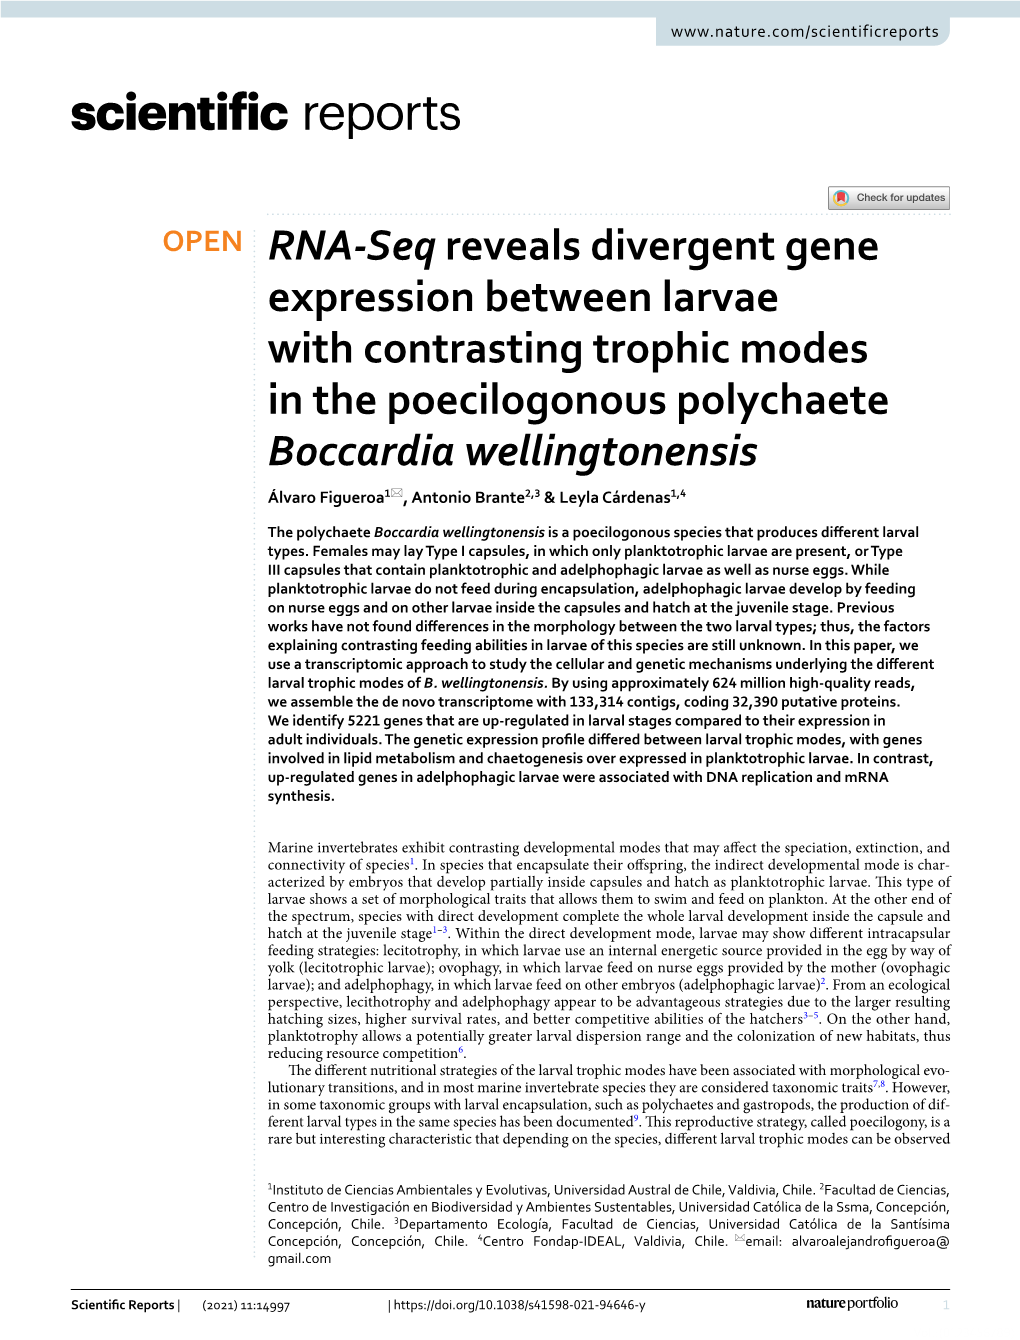 RNA-Seq Reveals Divergent Gene Expression Between Larvae